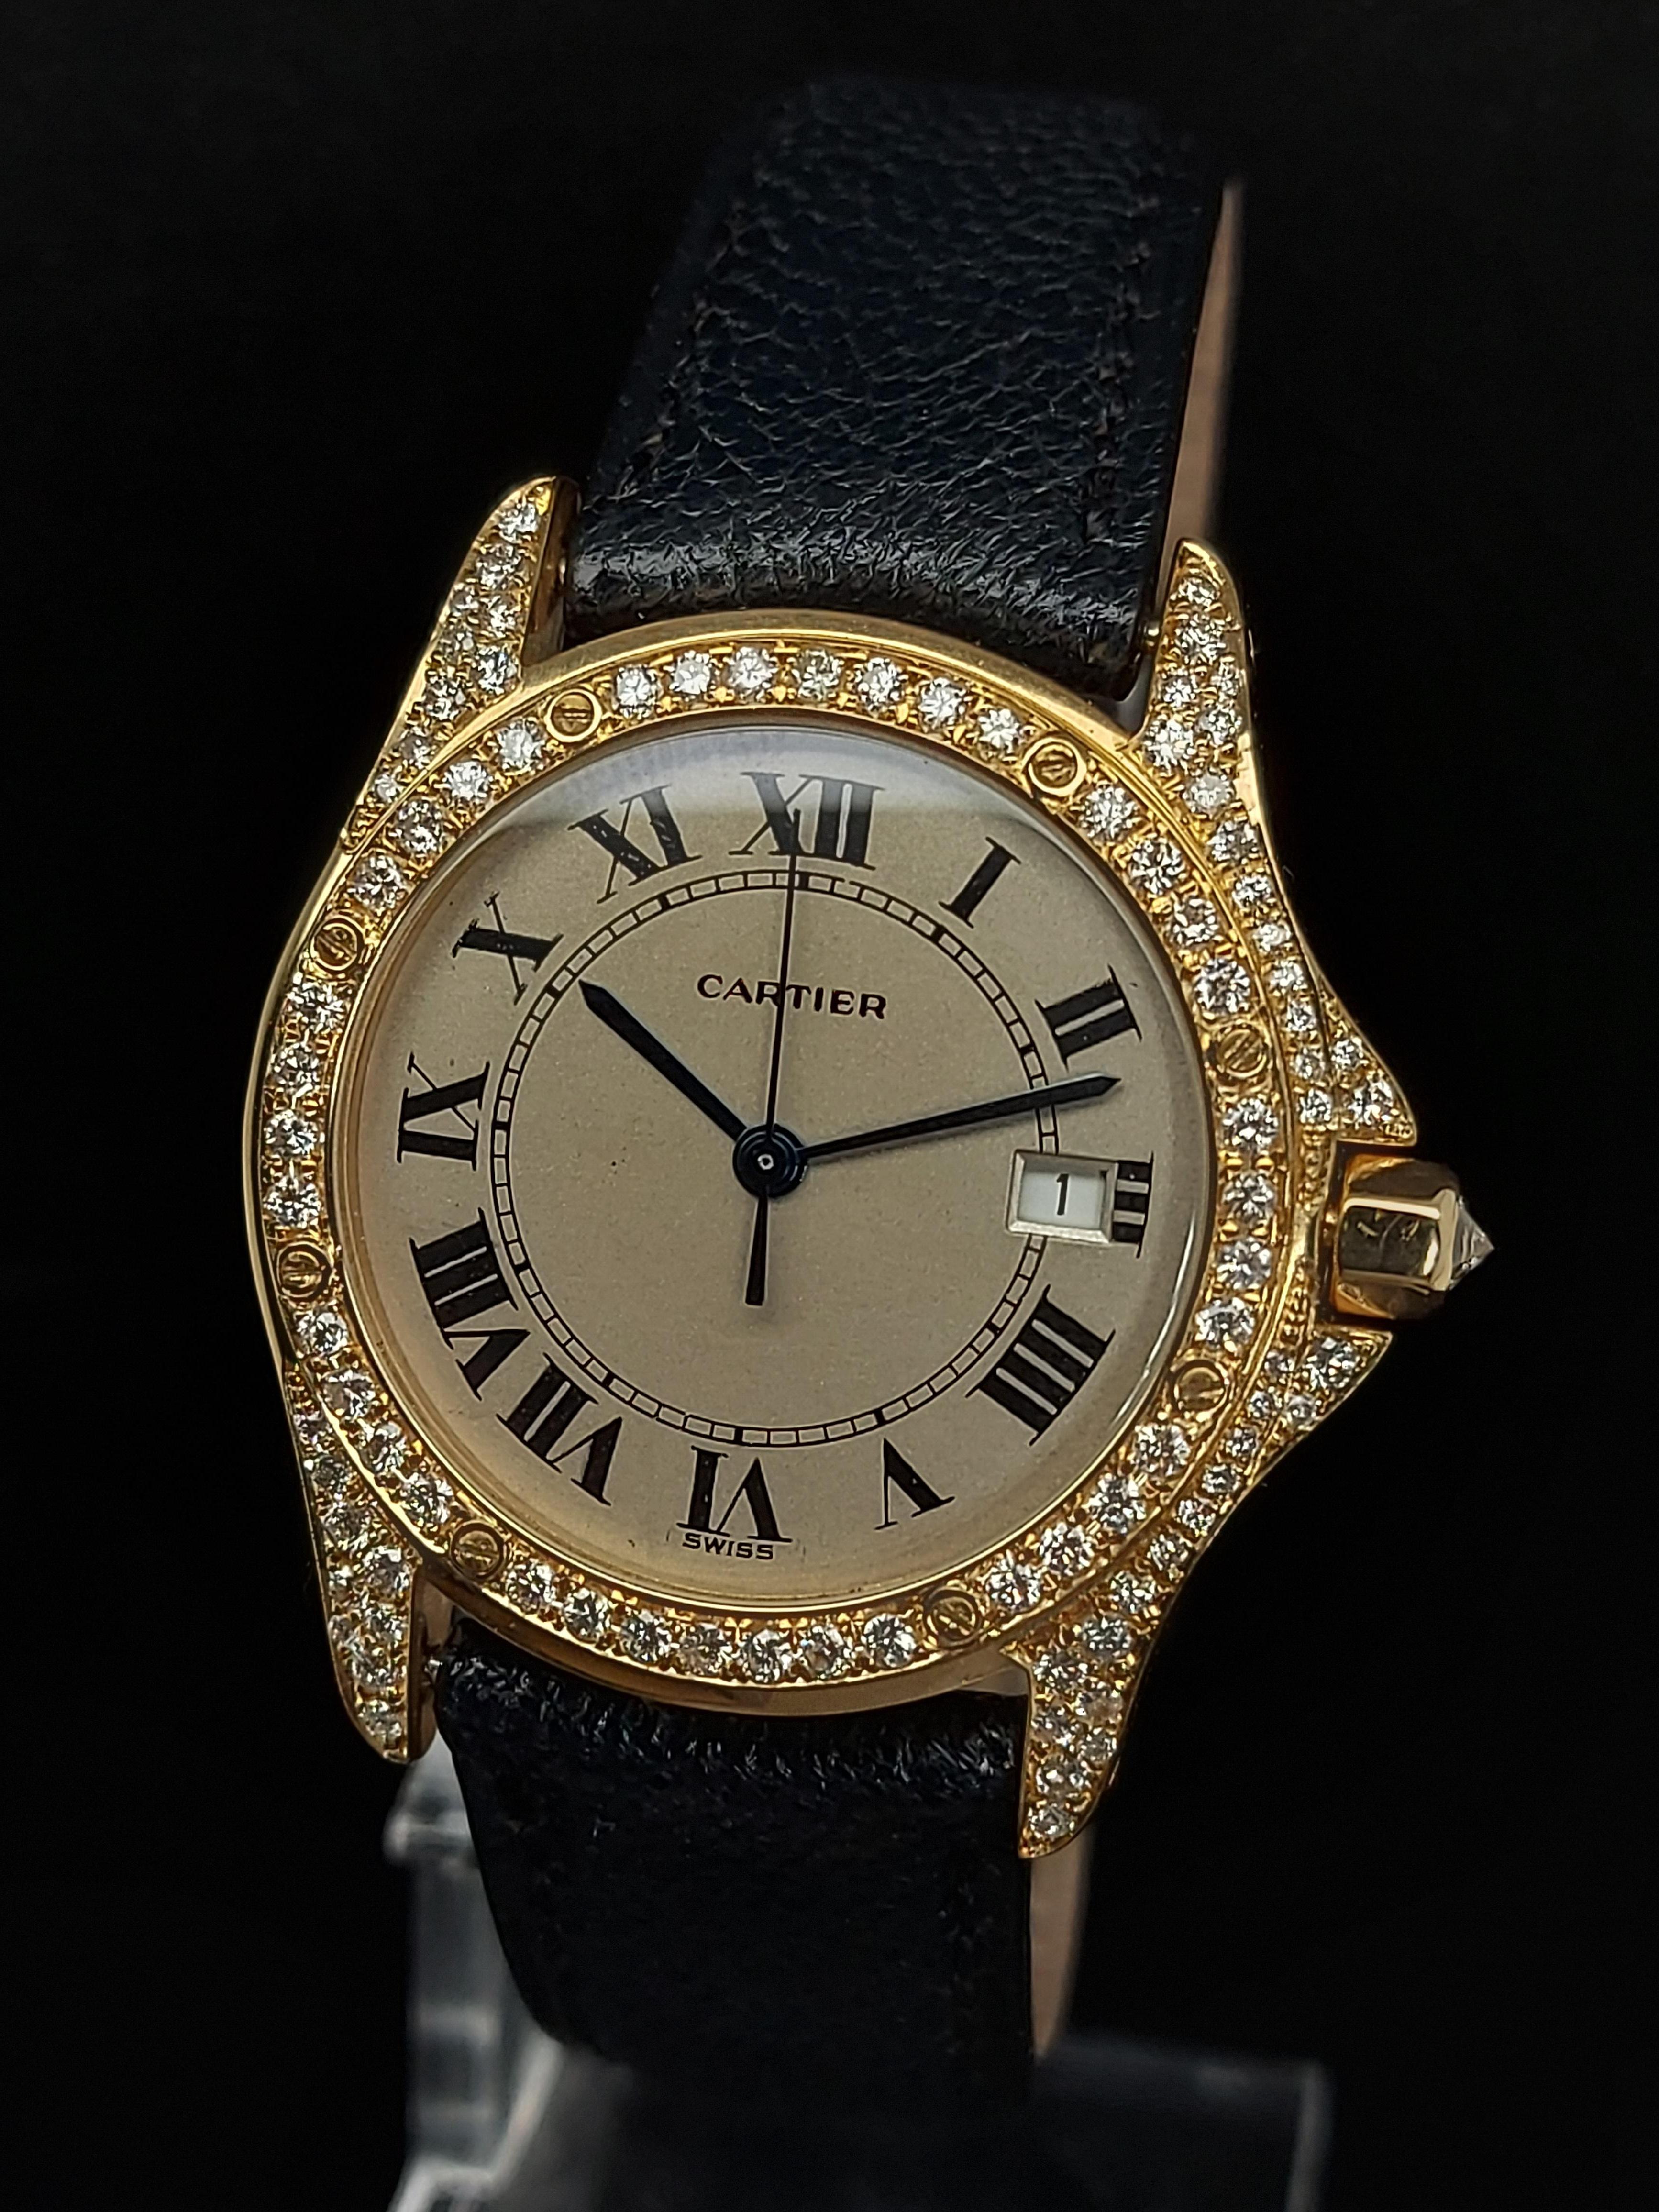 Cartier Cougar Wrist Watch, 18 kt Yellow Gold 30 mm, Diamond Bezel, Quartz

Movement: Quartz

Functions: Hours, Minutes, Seconds, Date window at 3 o'clock

Case: 18 kt yellow gold case, Diameter 30 mm, Thickness 6.8 mm, Diamond set bezel, Water